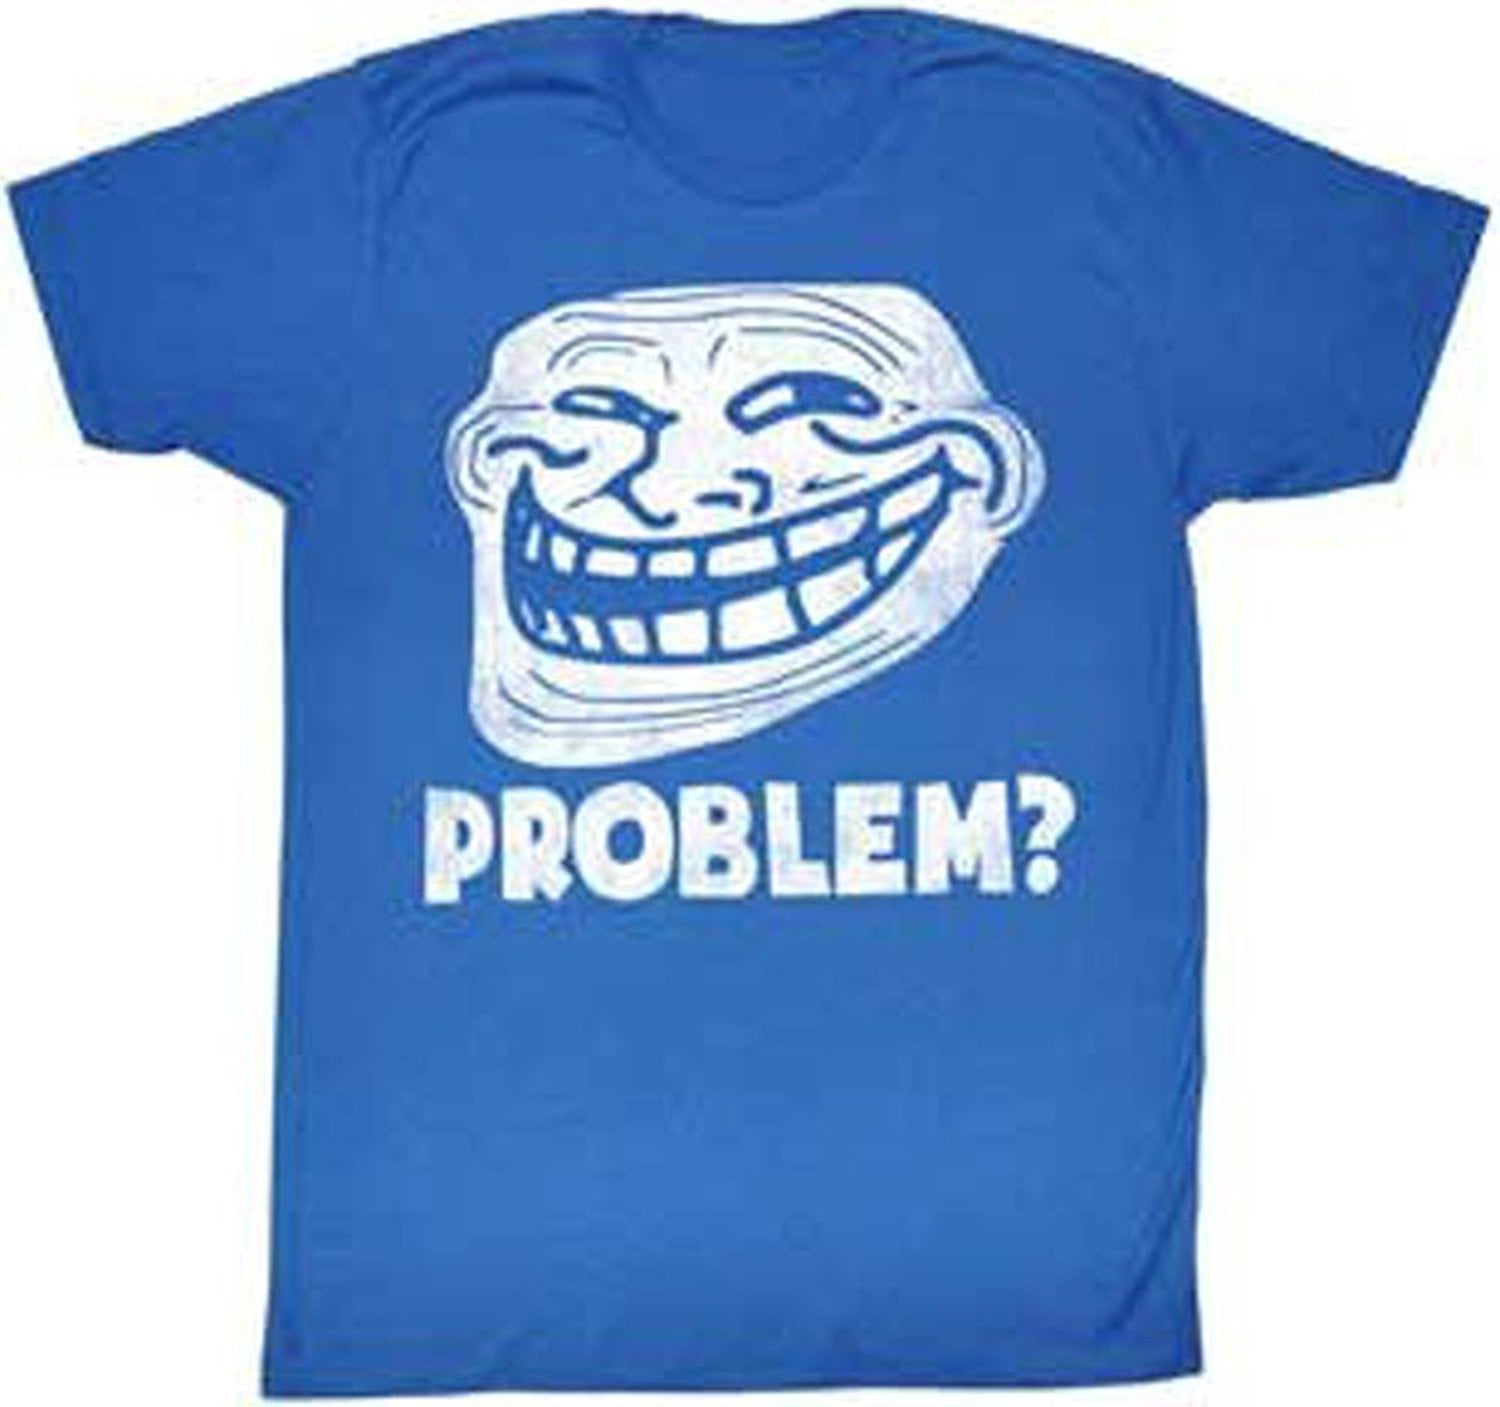 Troll face roblox t shirt